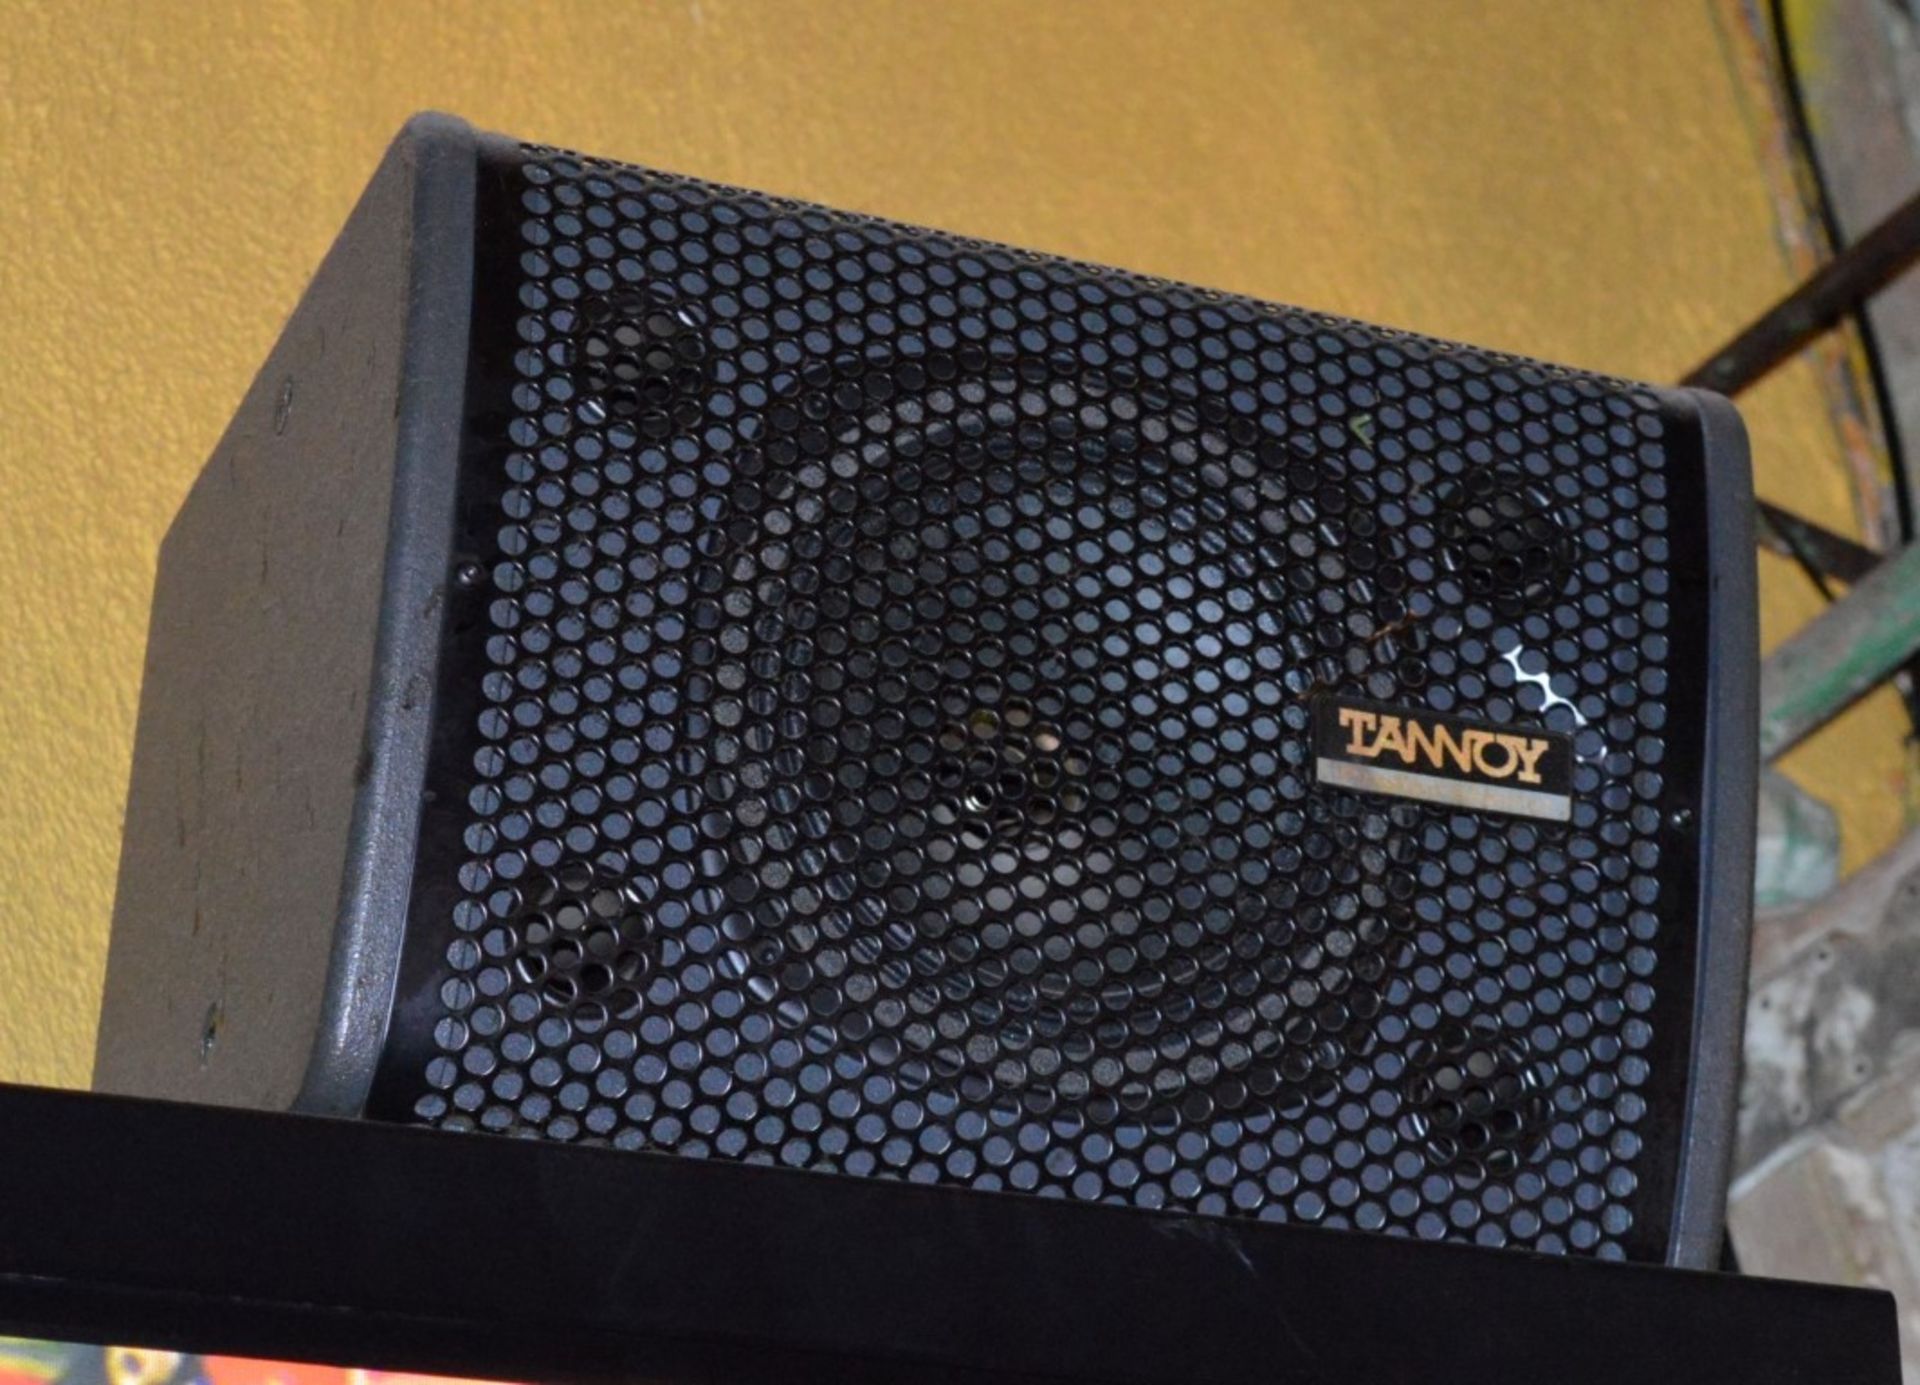 2 x Tannoy i8 130 watt 8 Ω Dual Concentric Loudspeakers - CL150 - Location: Altrincham WA14 - More - Image 3 of 3